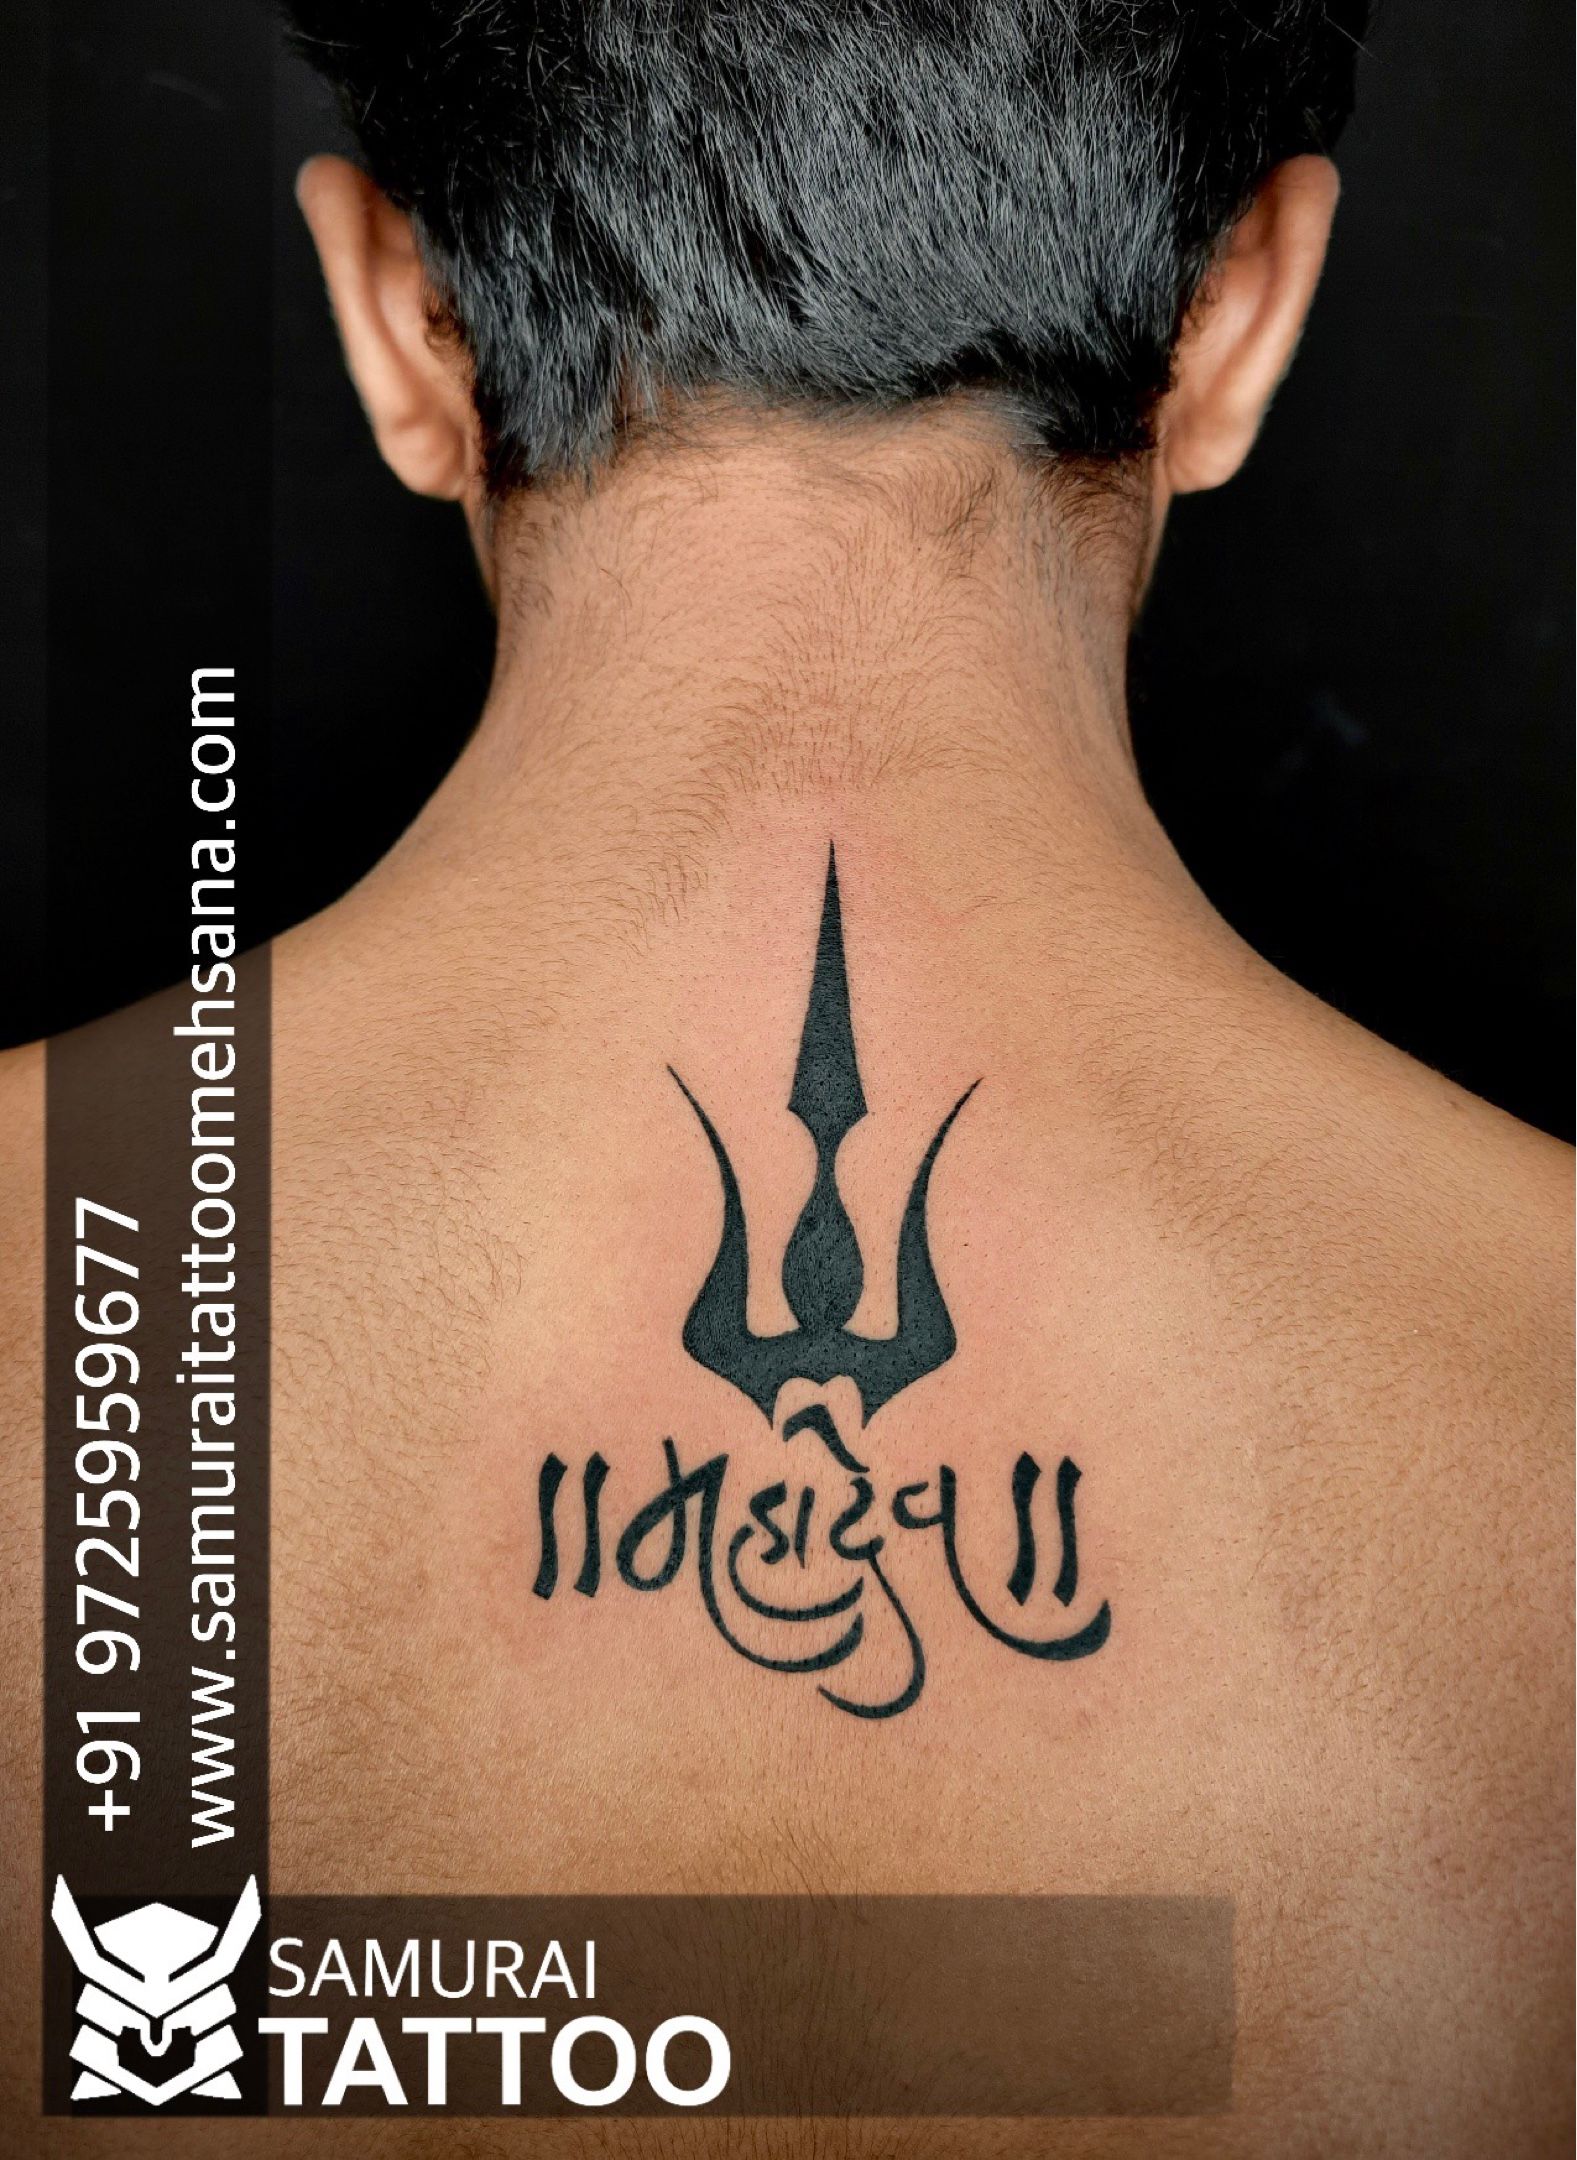 trishul Mokshatattoostudio  Best Tattoo Artist in Goa Safe Hygienic 1  Best Tattoo Studio In Goa India